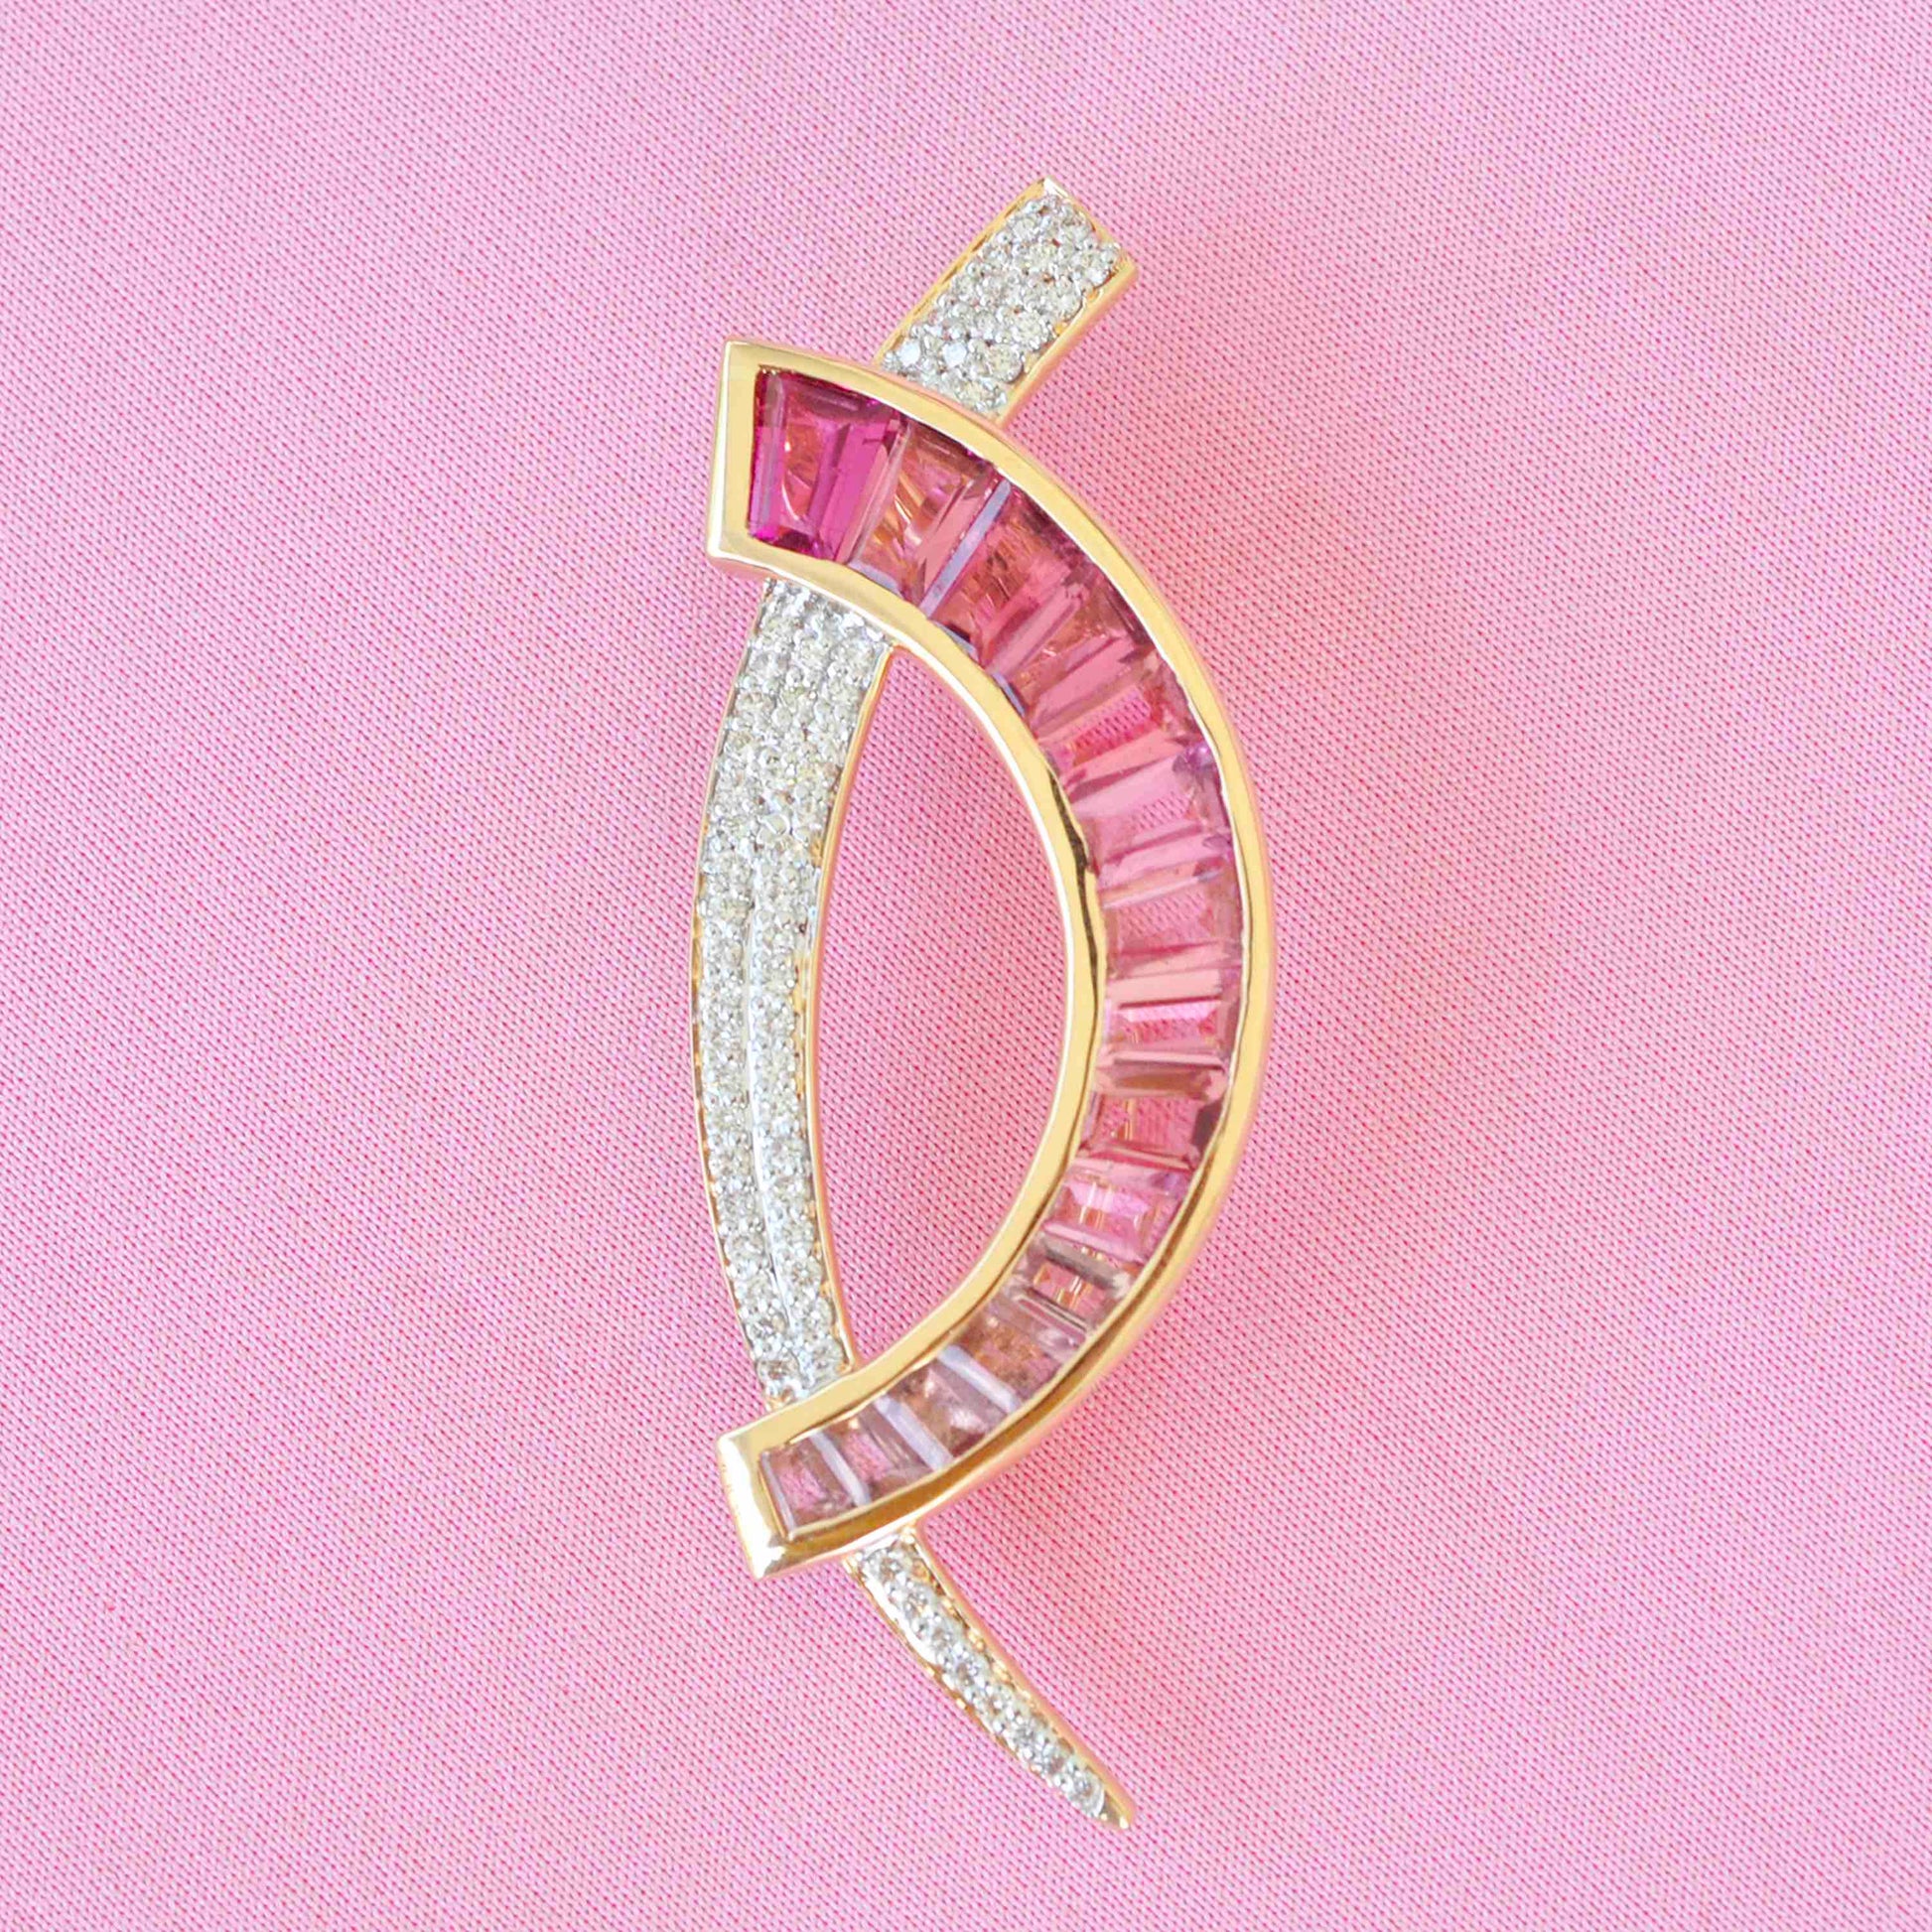 18K Gold "D" Channel-Set Pink Tourmaline Diamond Pendant Brooch - Vaibhav Dhadda Jewelry